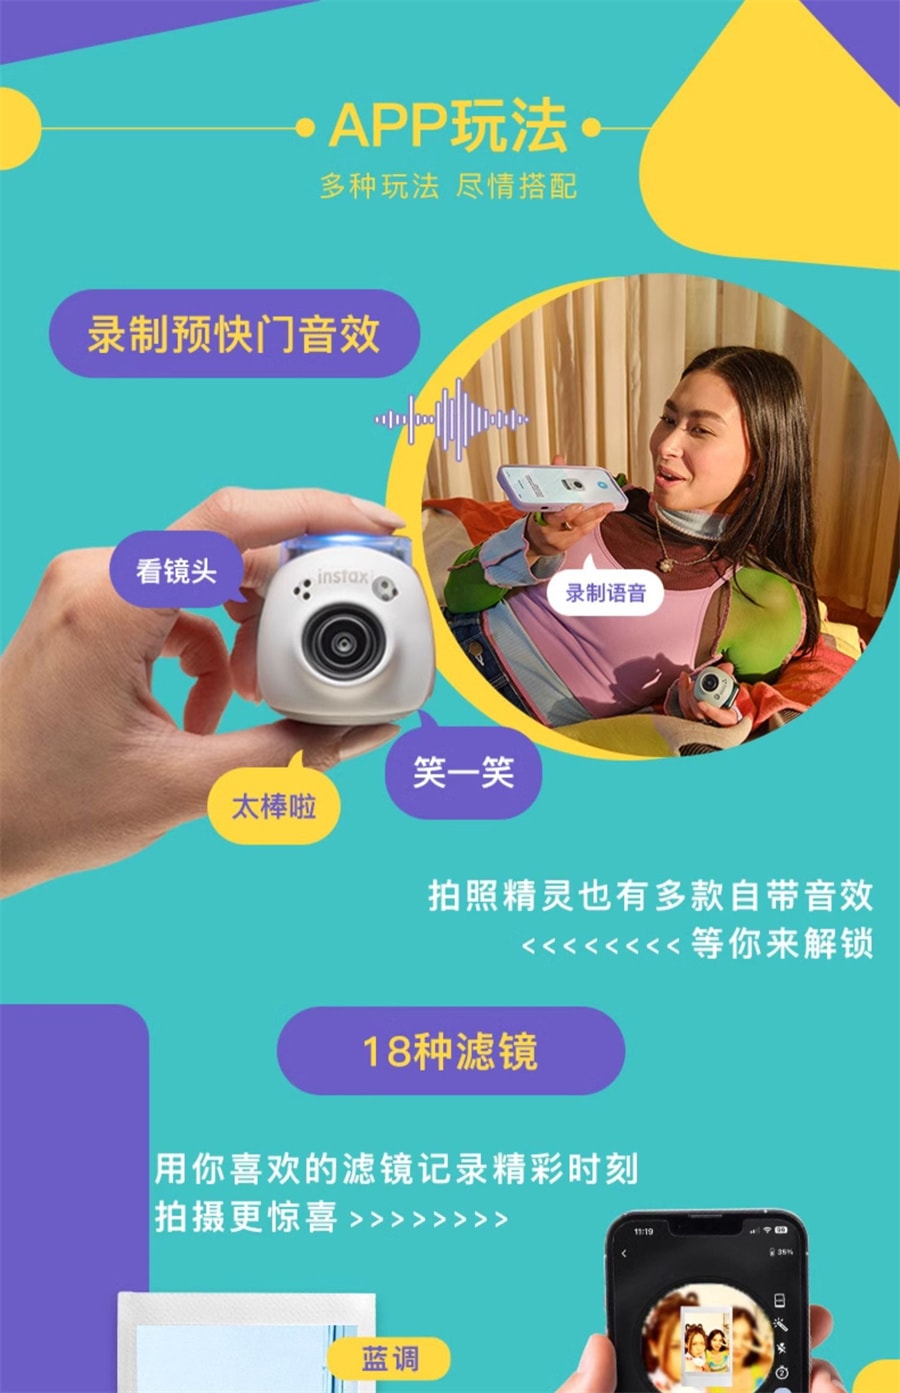 Instax Pal Smart Camera Compact Portable Mini Photo Wizard Pal Cute Denim Blue Official Standard